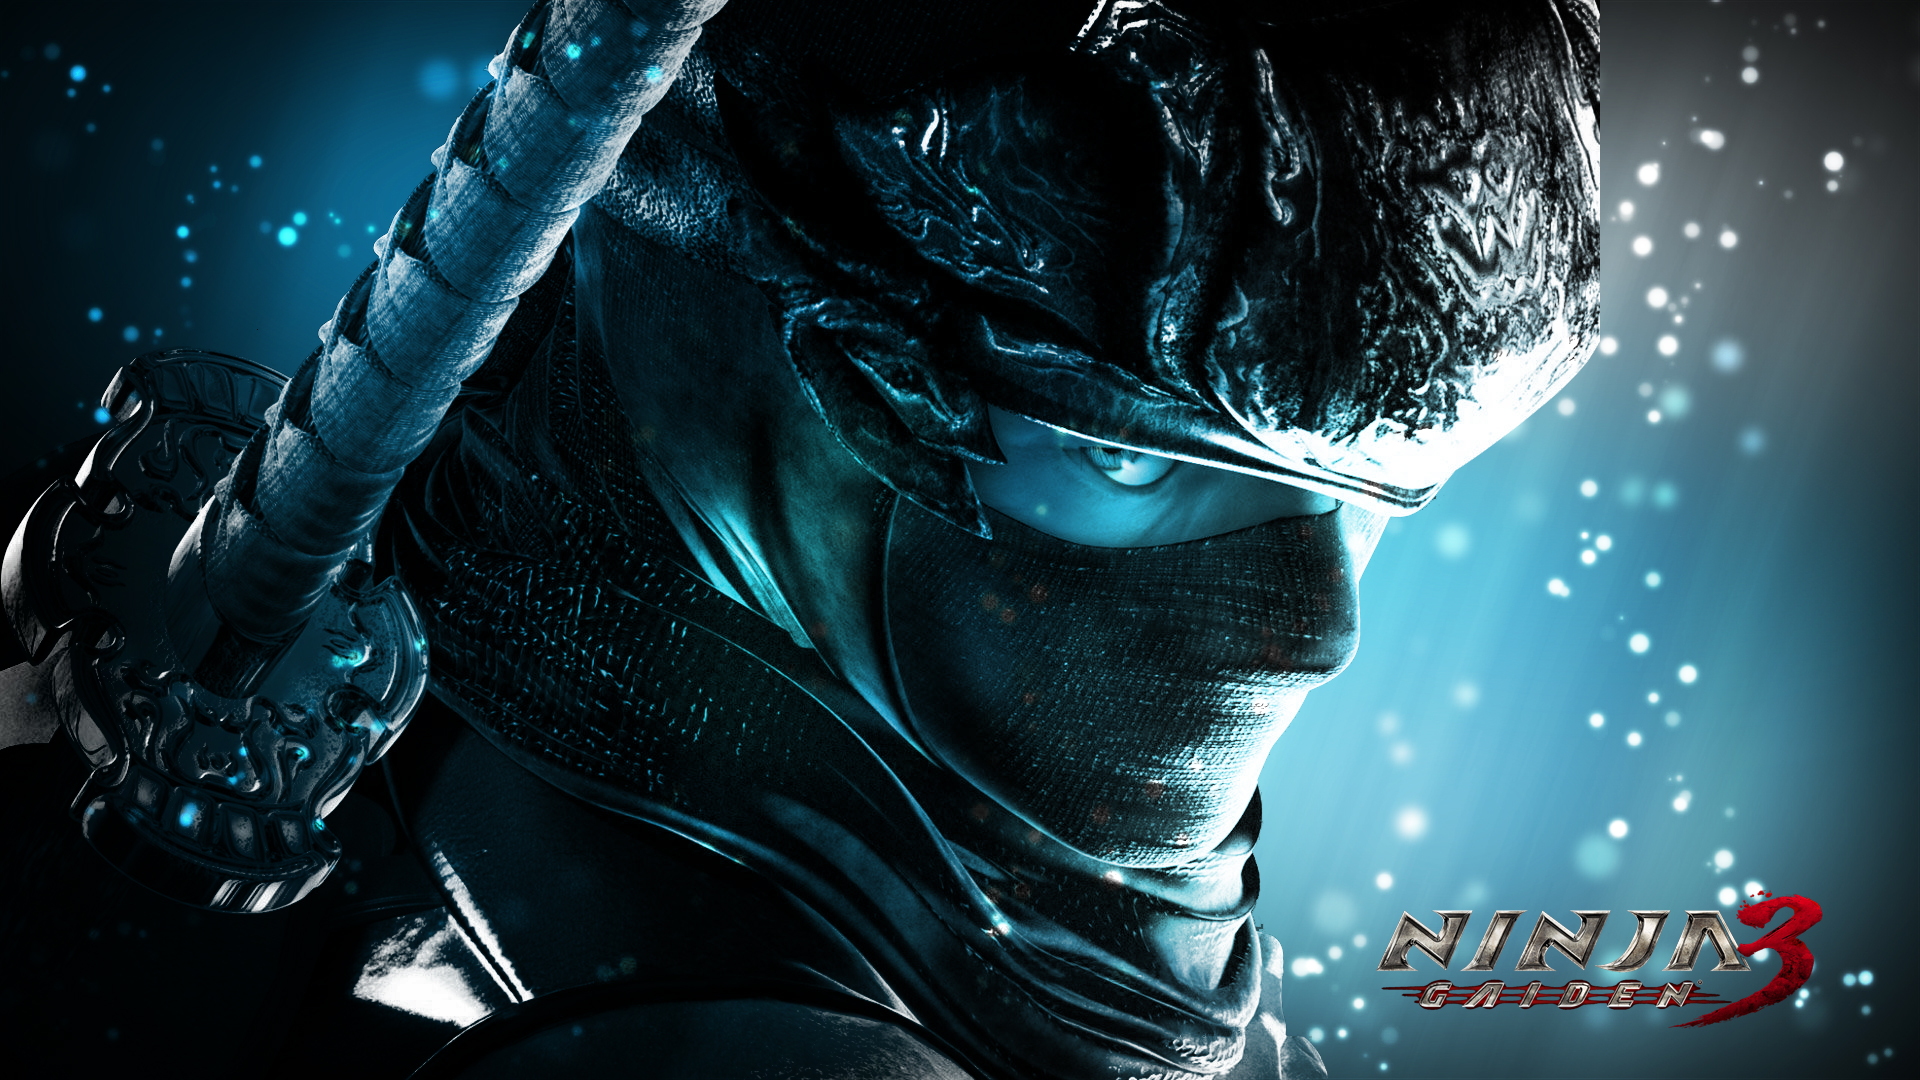 Ninja Gaiden Fantasy Anime Warrior Weapon Sword Poster F Wallpaper